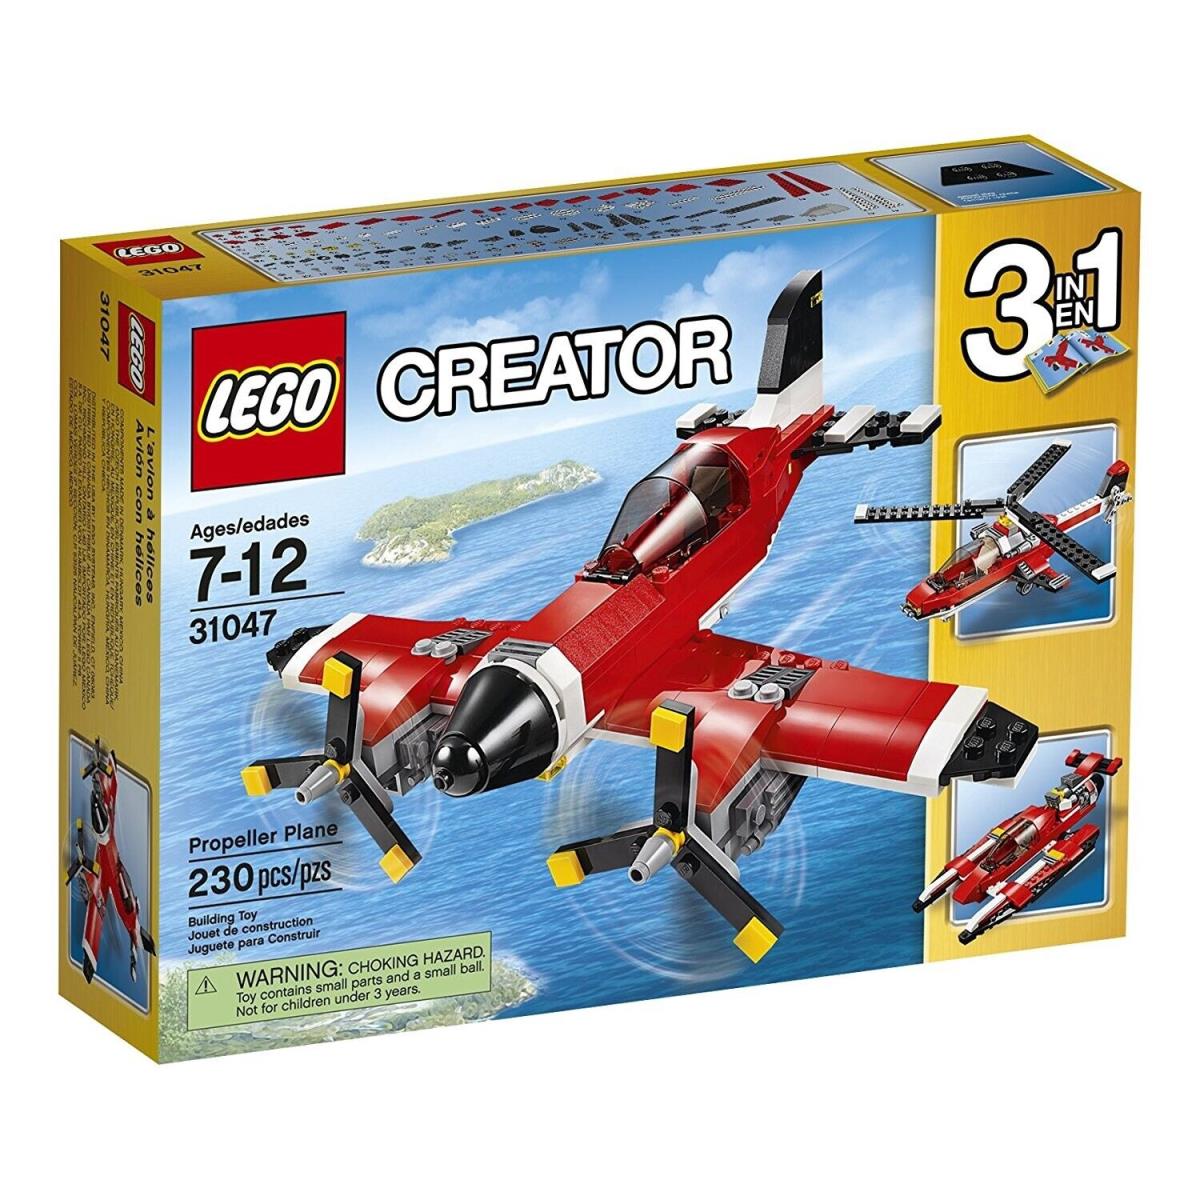 Lego Creator 31047 - Propeller Plane